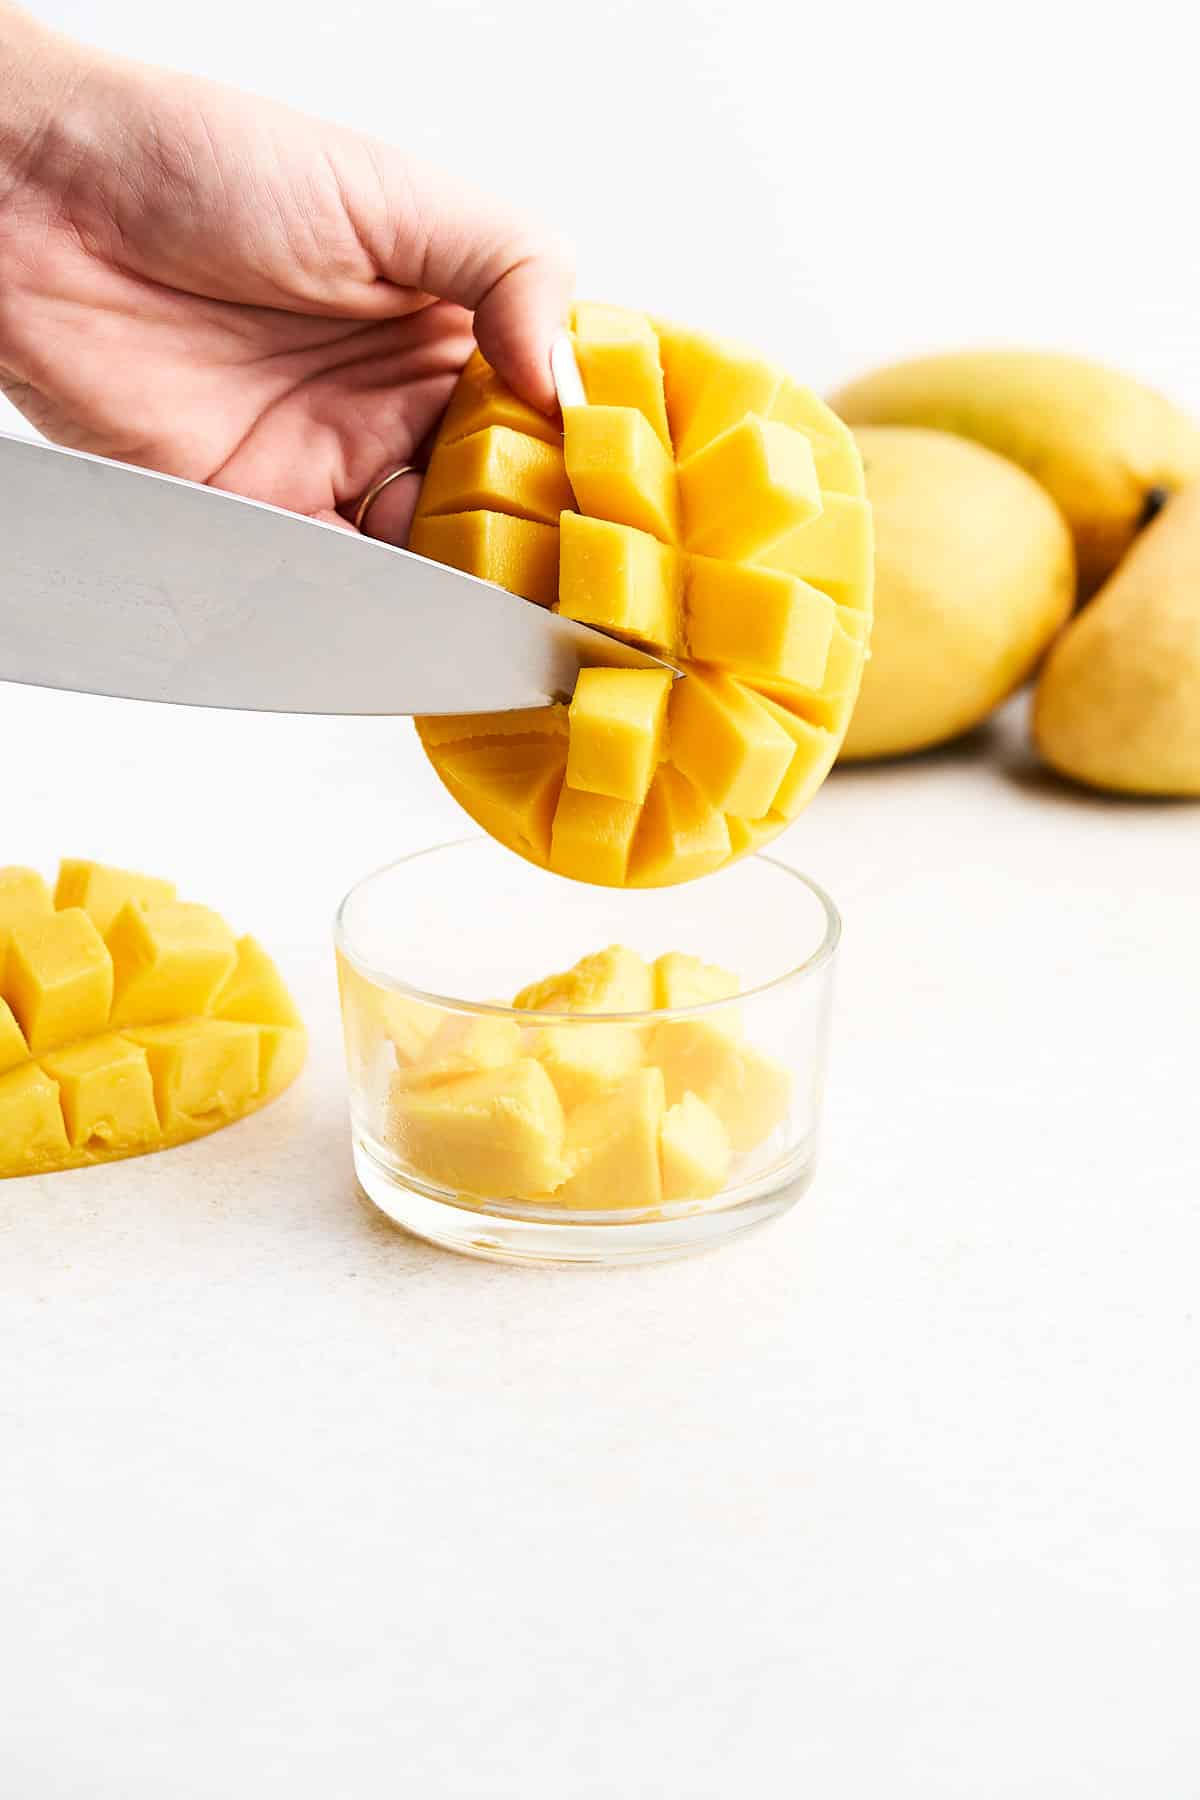 Cutting cubes off a mango.